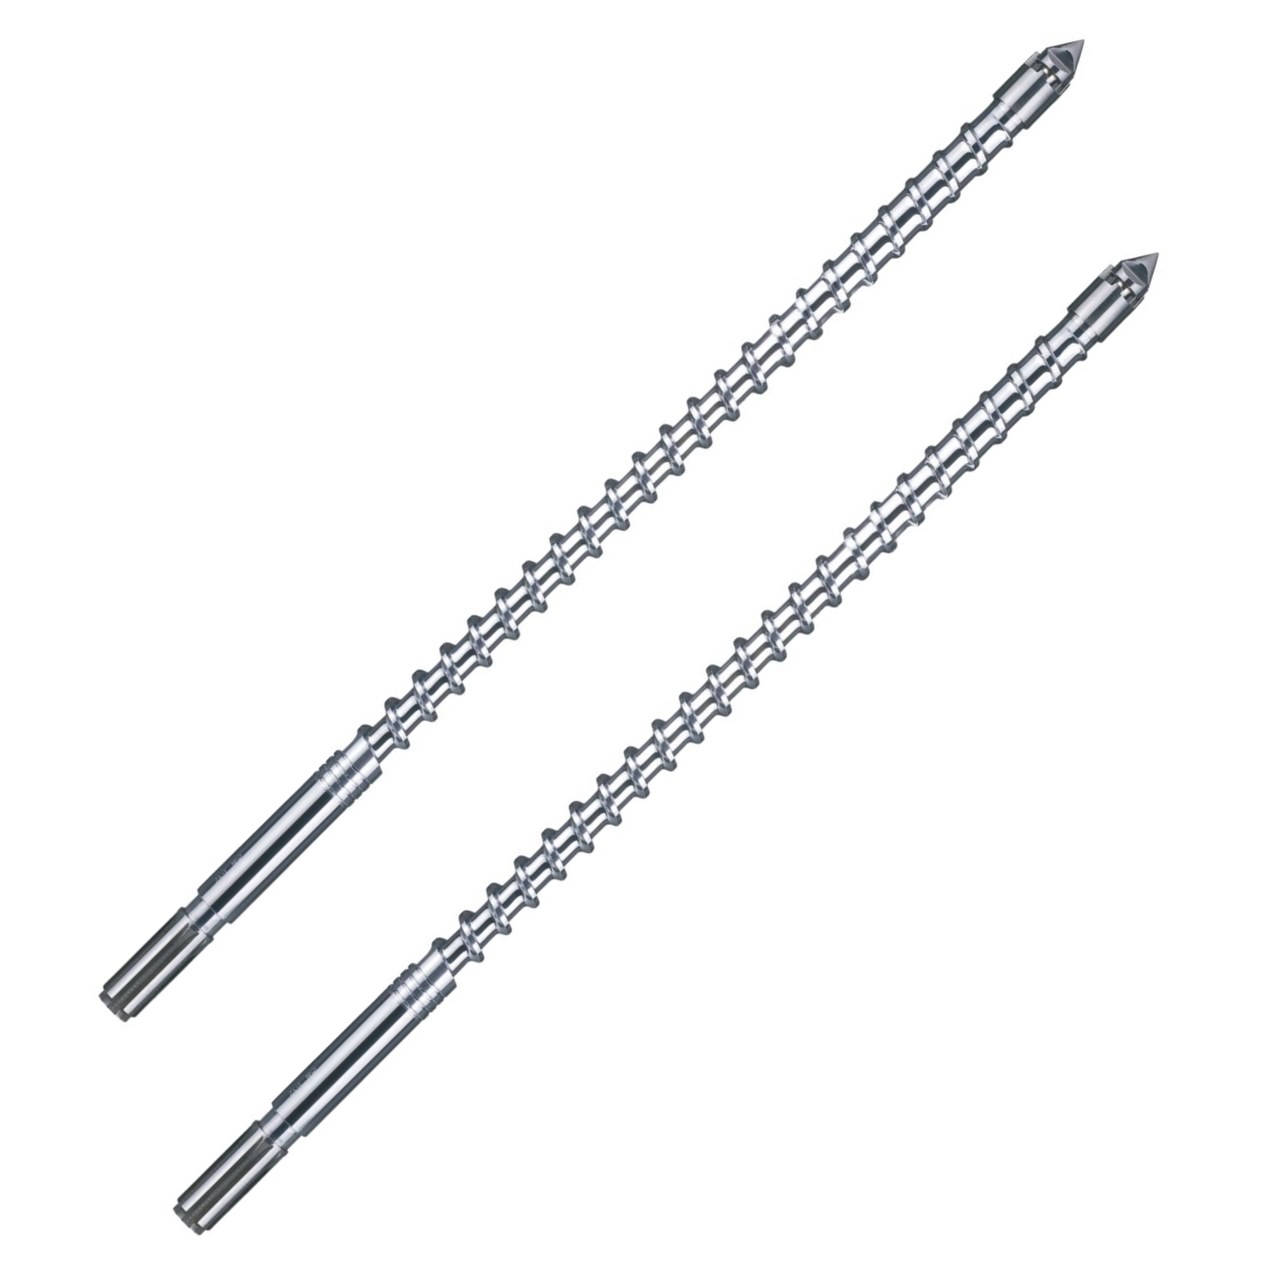 Hard alloy steel screw